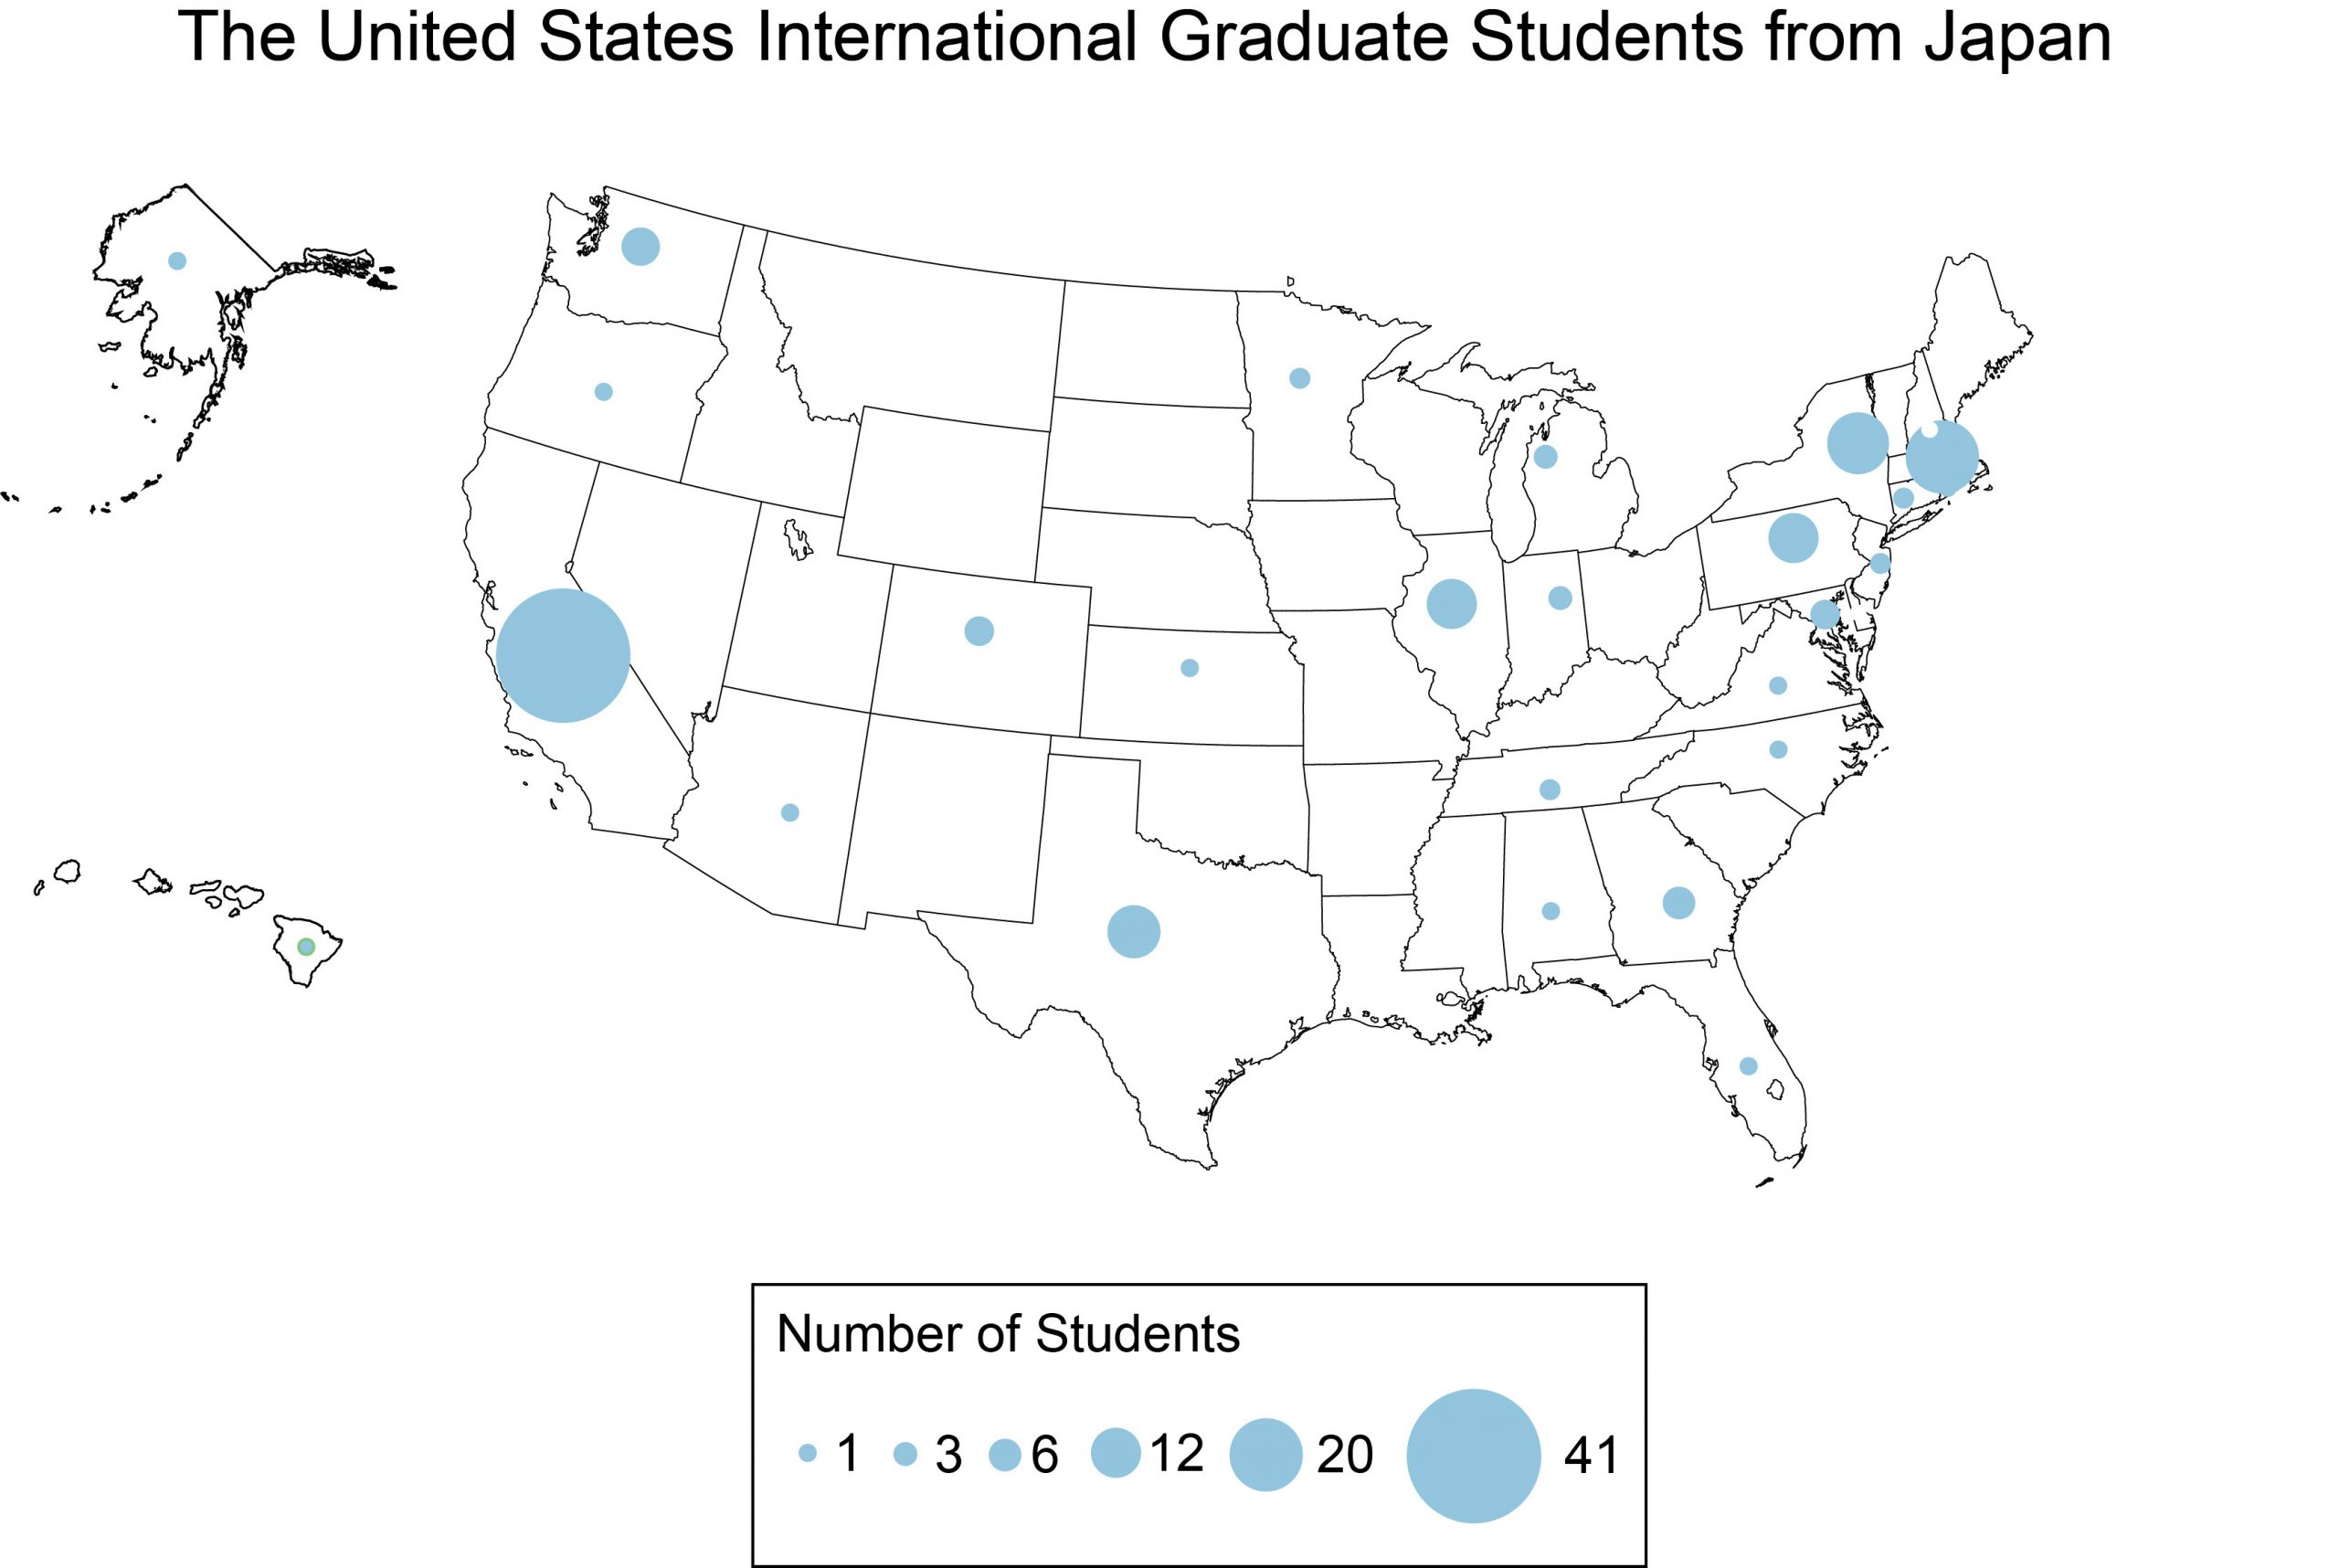 us_states_jp_international_graduate_students.v3